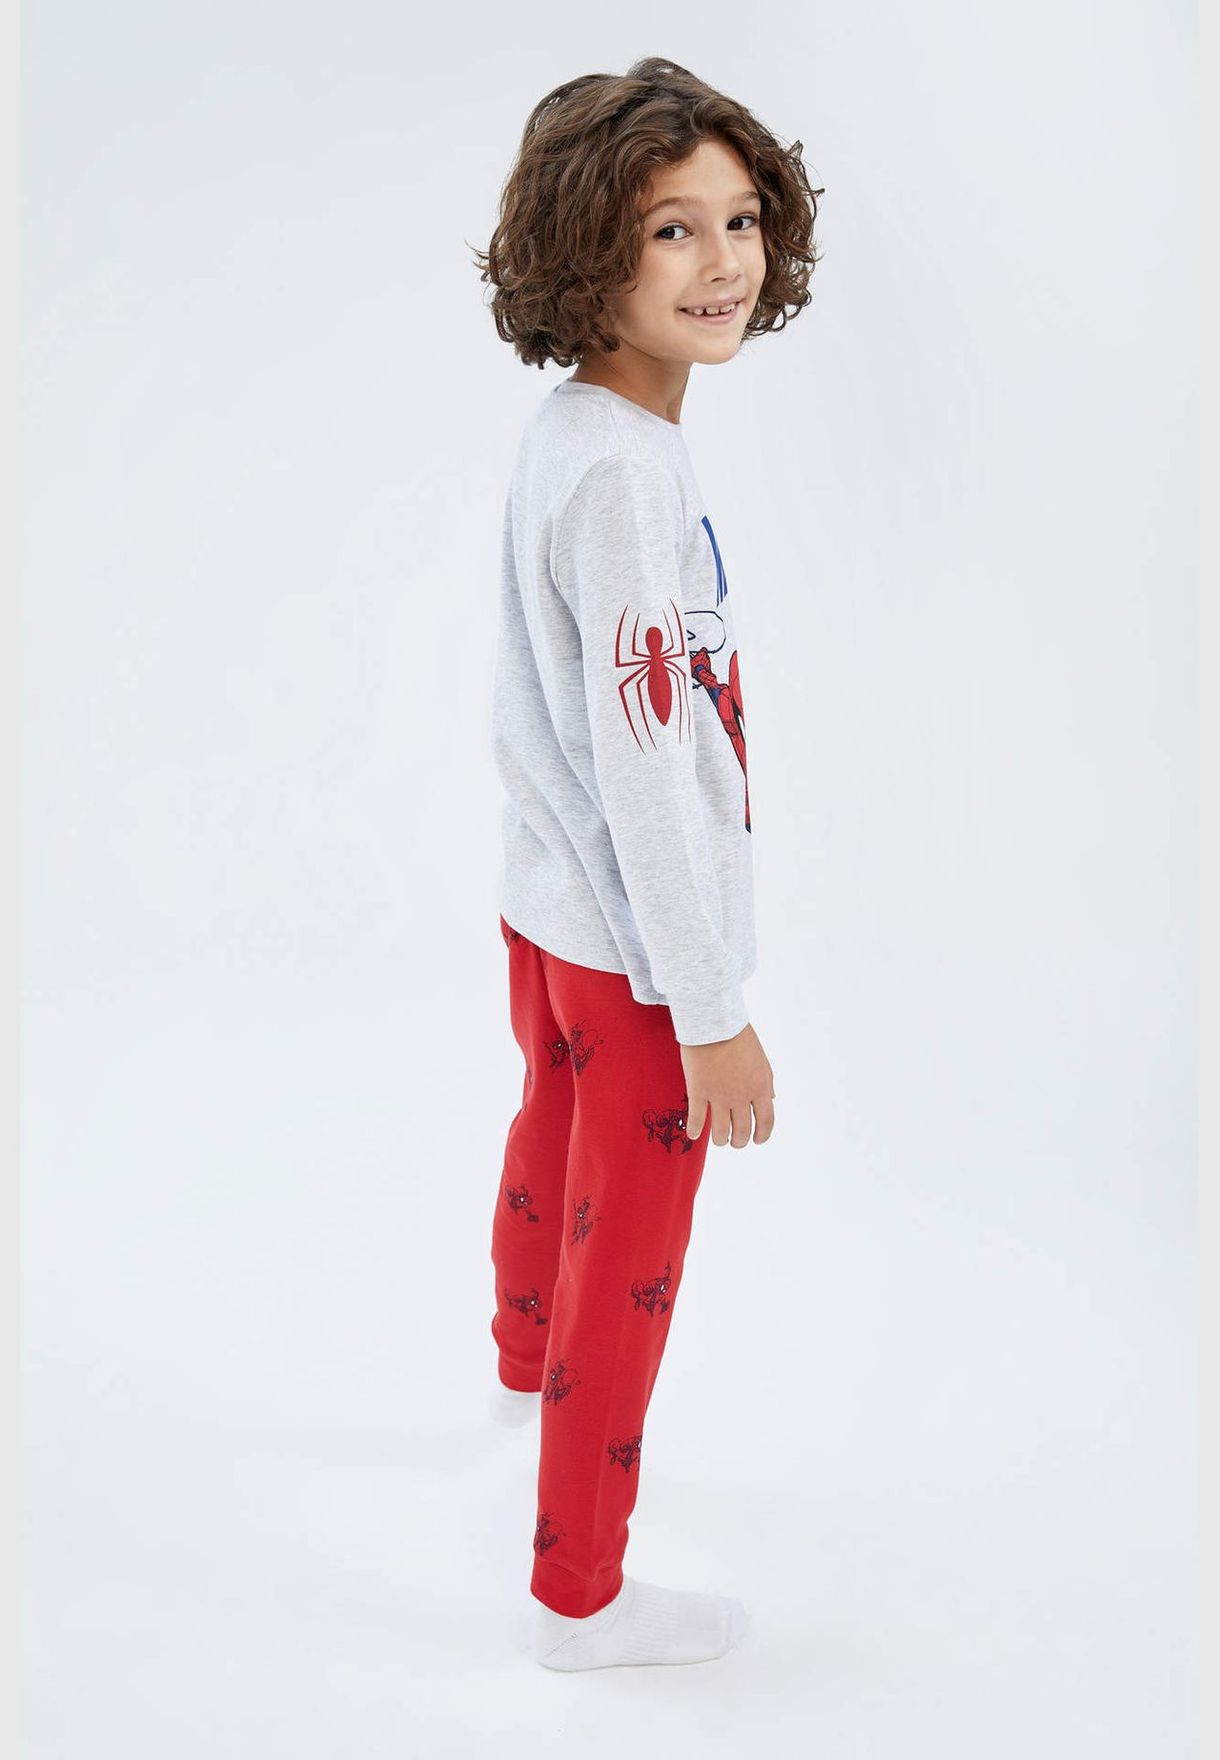 2 Pack Boy Marvel Spiderman Licenced Long Sleeve Knitted Pyjamas